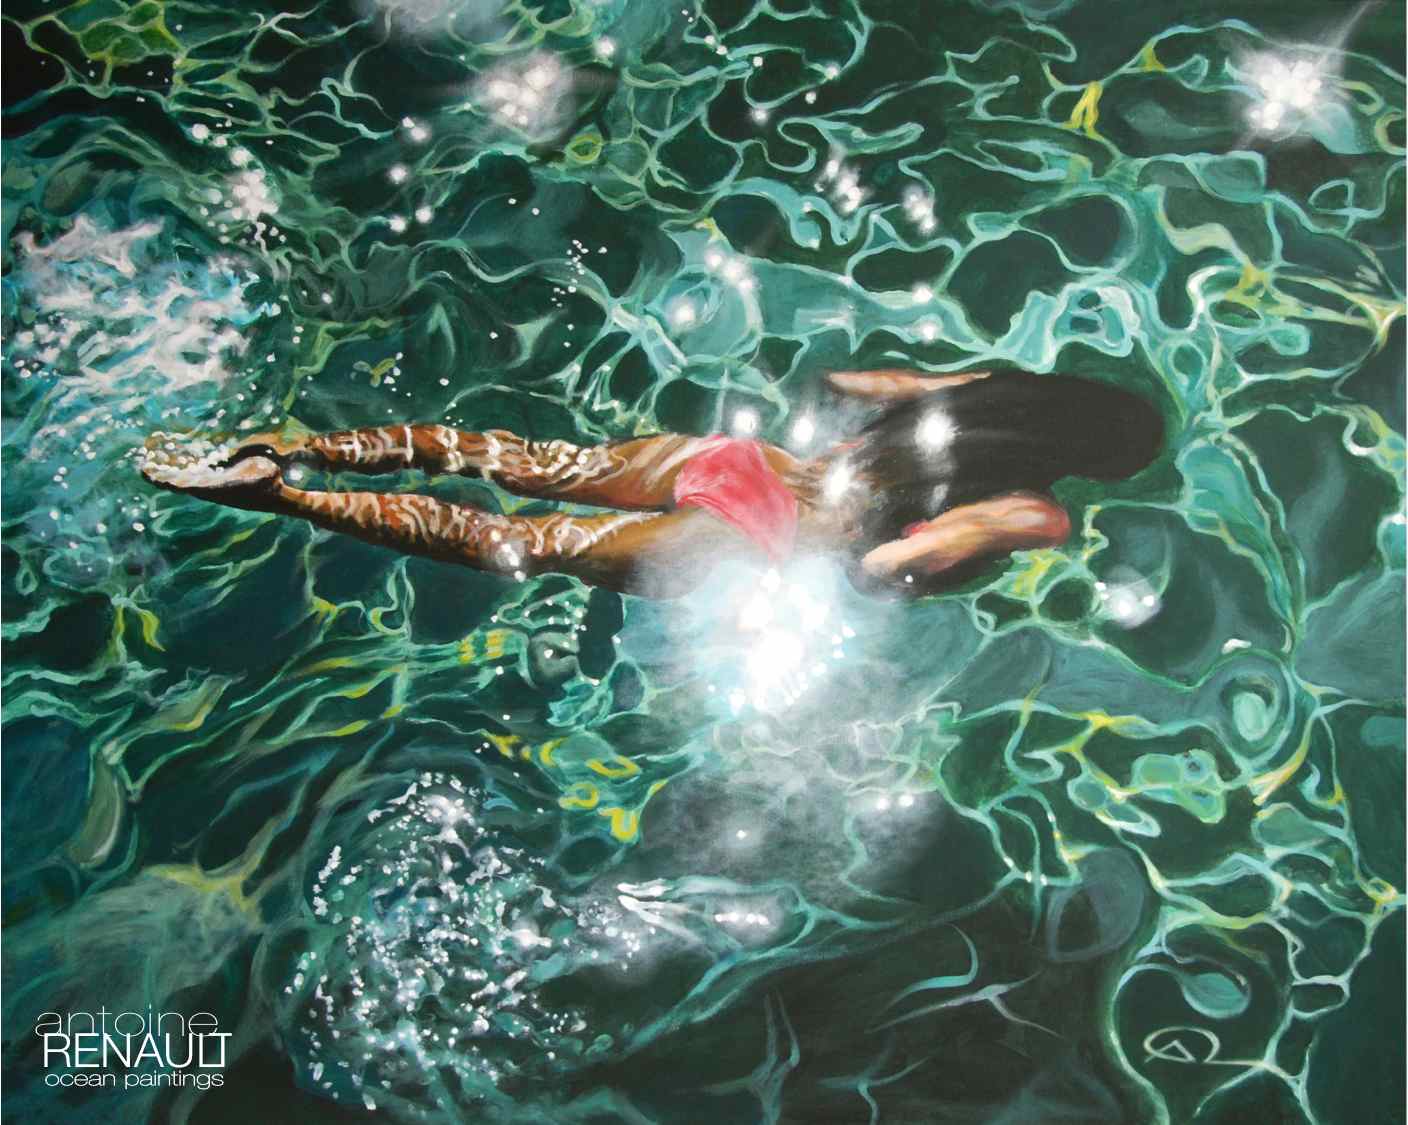 "Under the Levrossos pier" Antoine Renault - Ocean Paintings 2013 - Acrylic on canvas 100x80cm